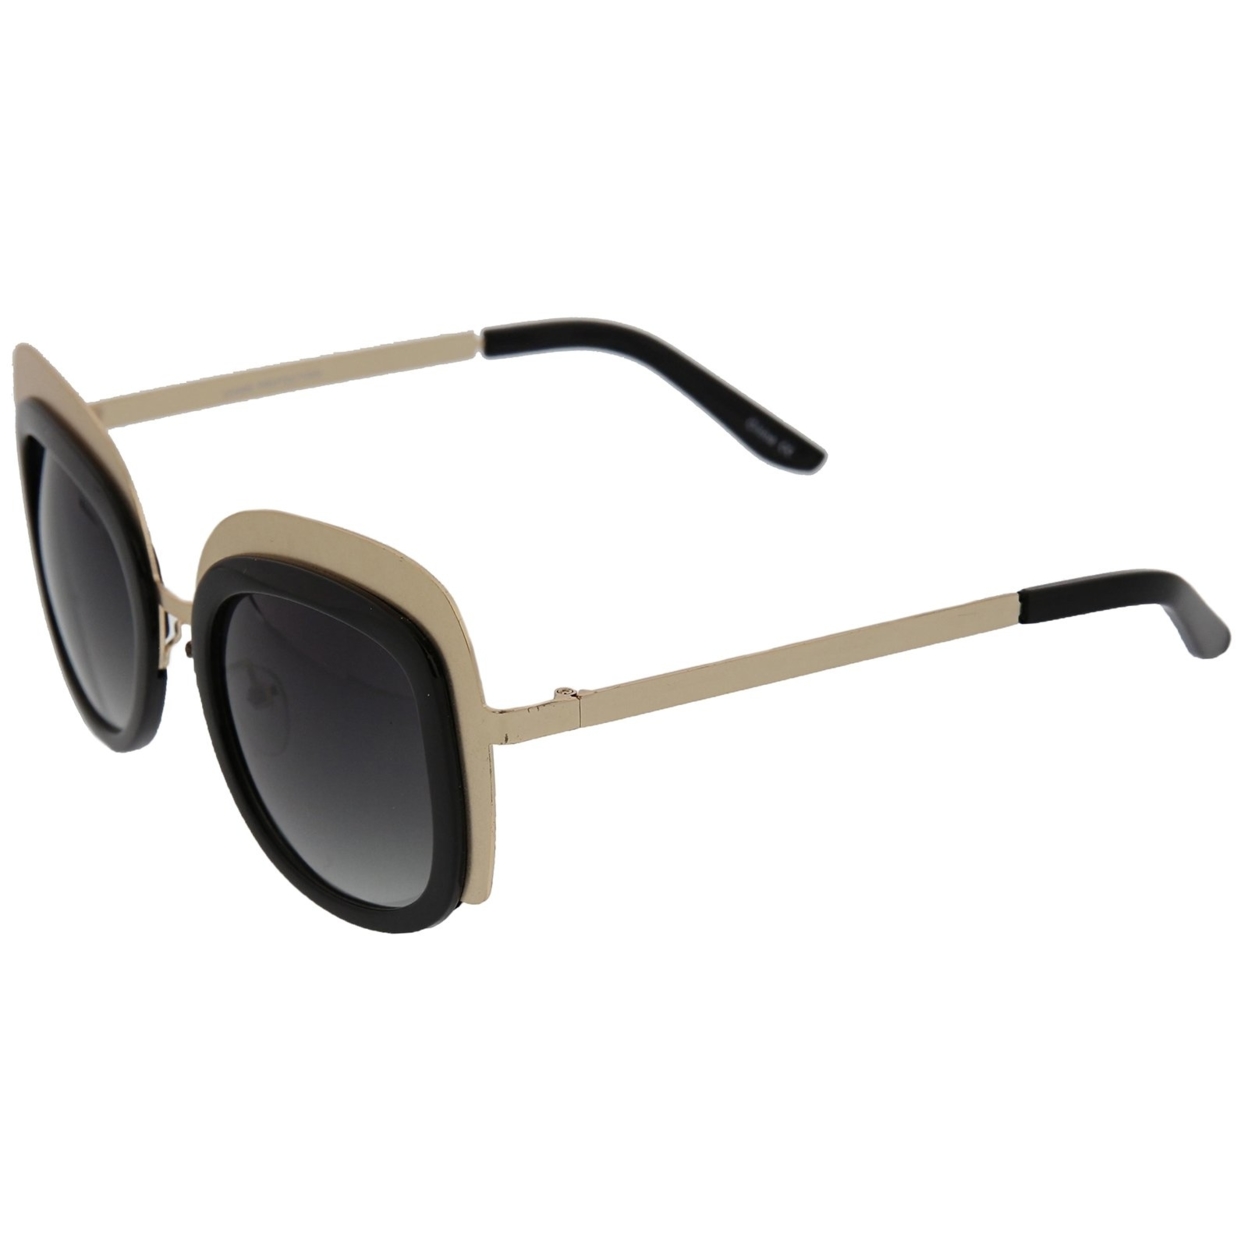 Women's Oversize Two-Tone Metal Frame Border Square Sunglasses 43mm - Gold-White / Amber